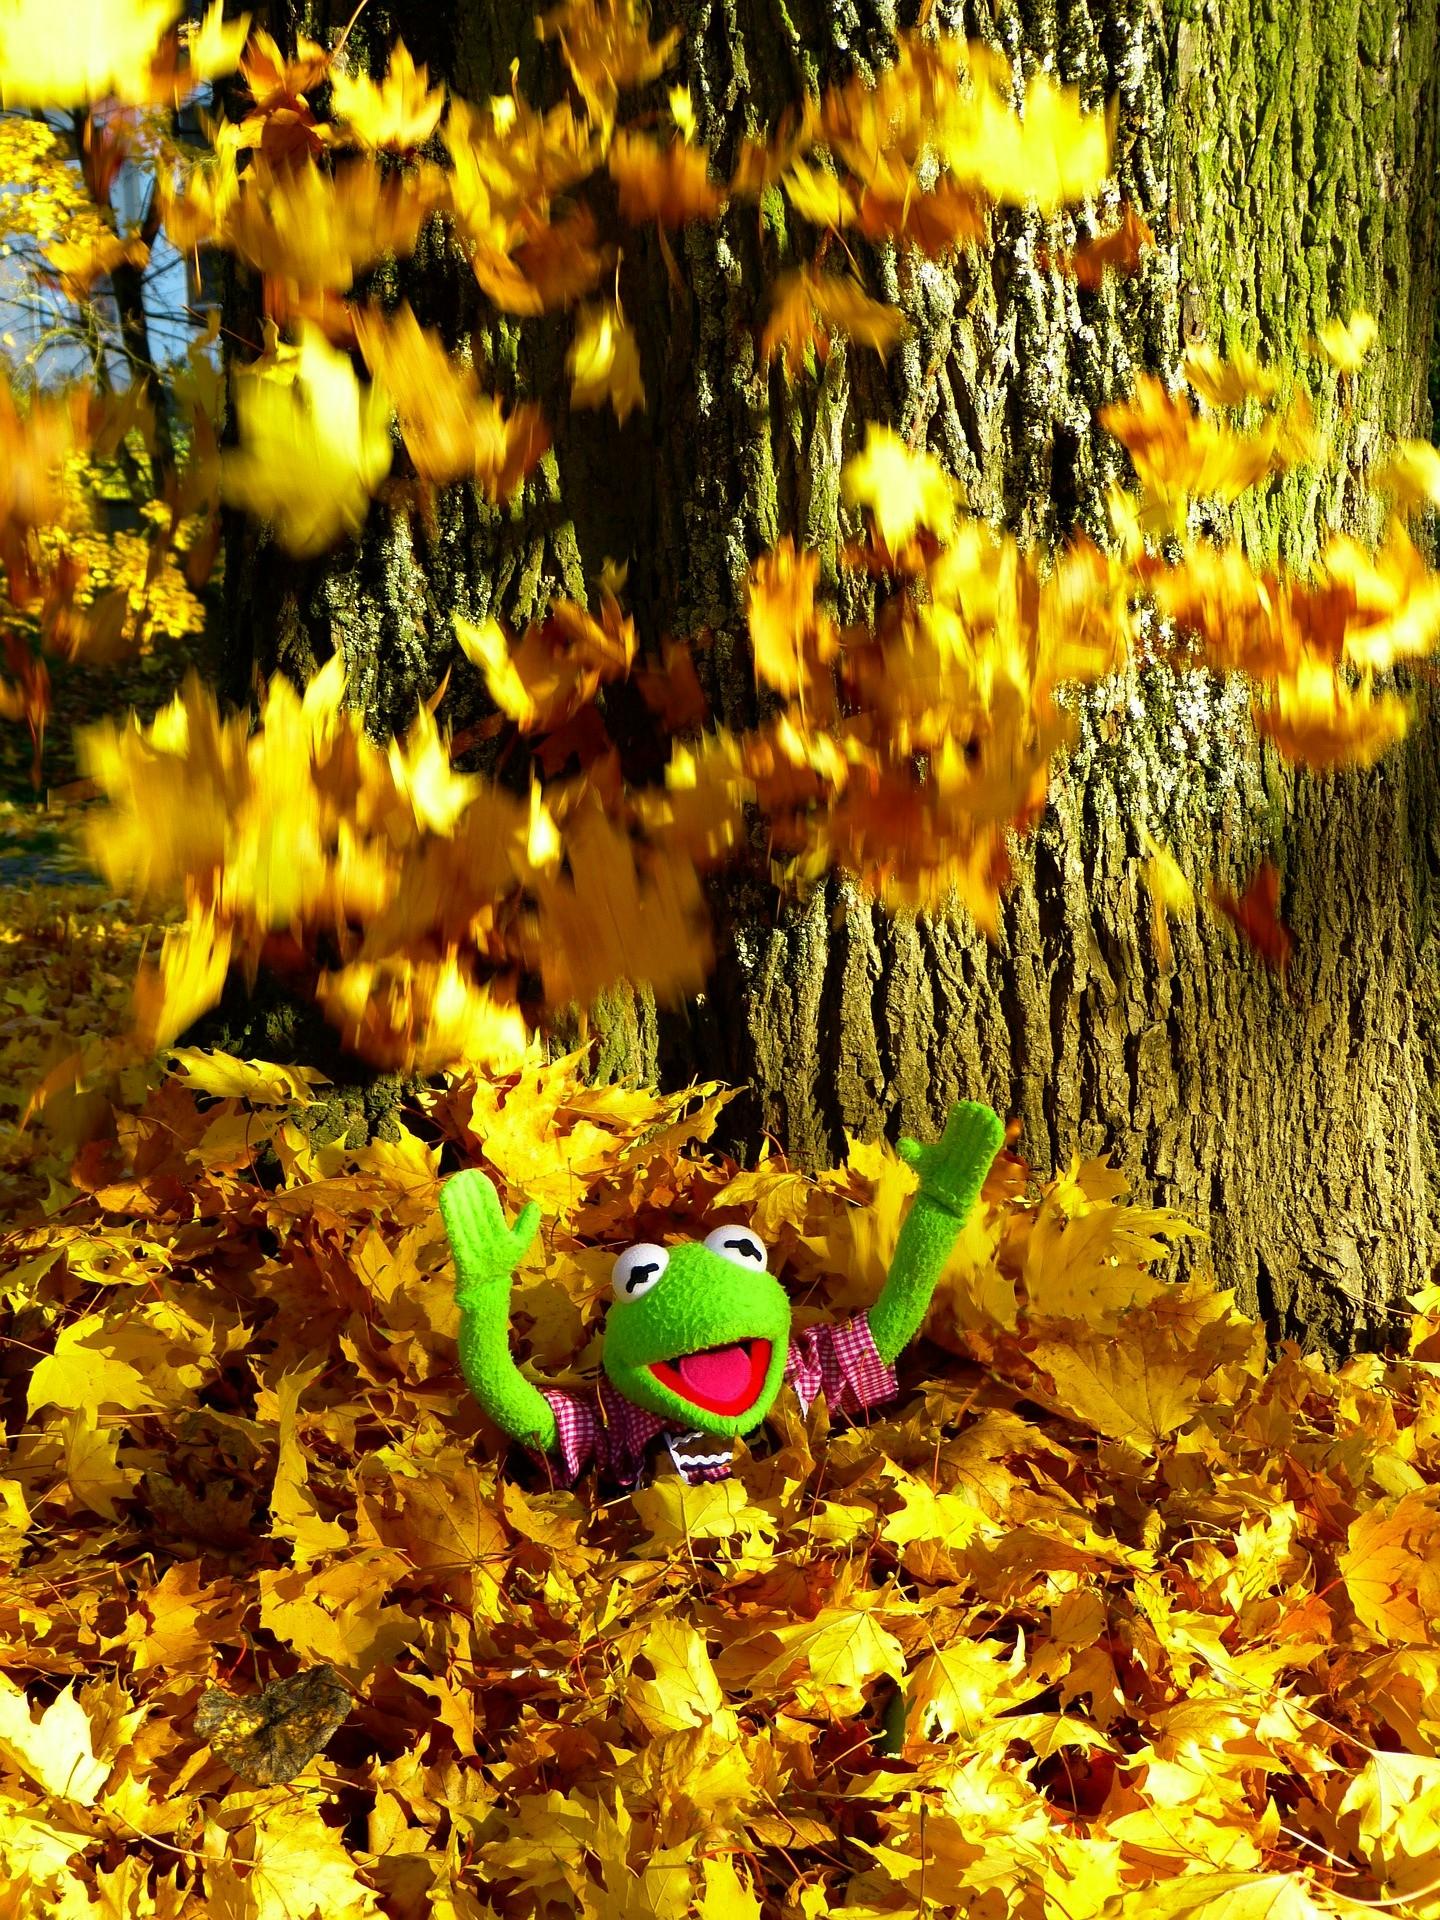 Kermit in the fall